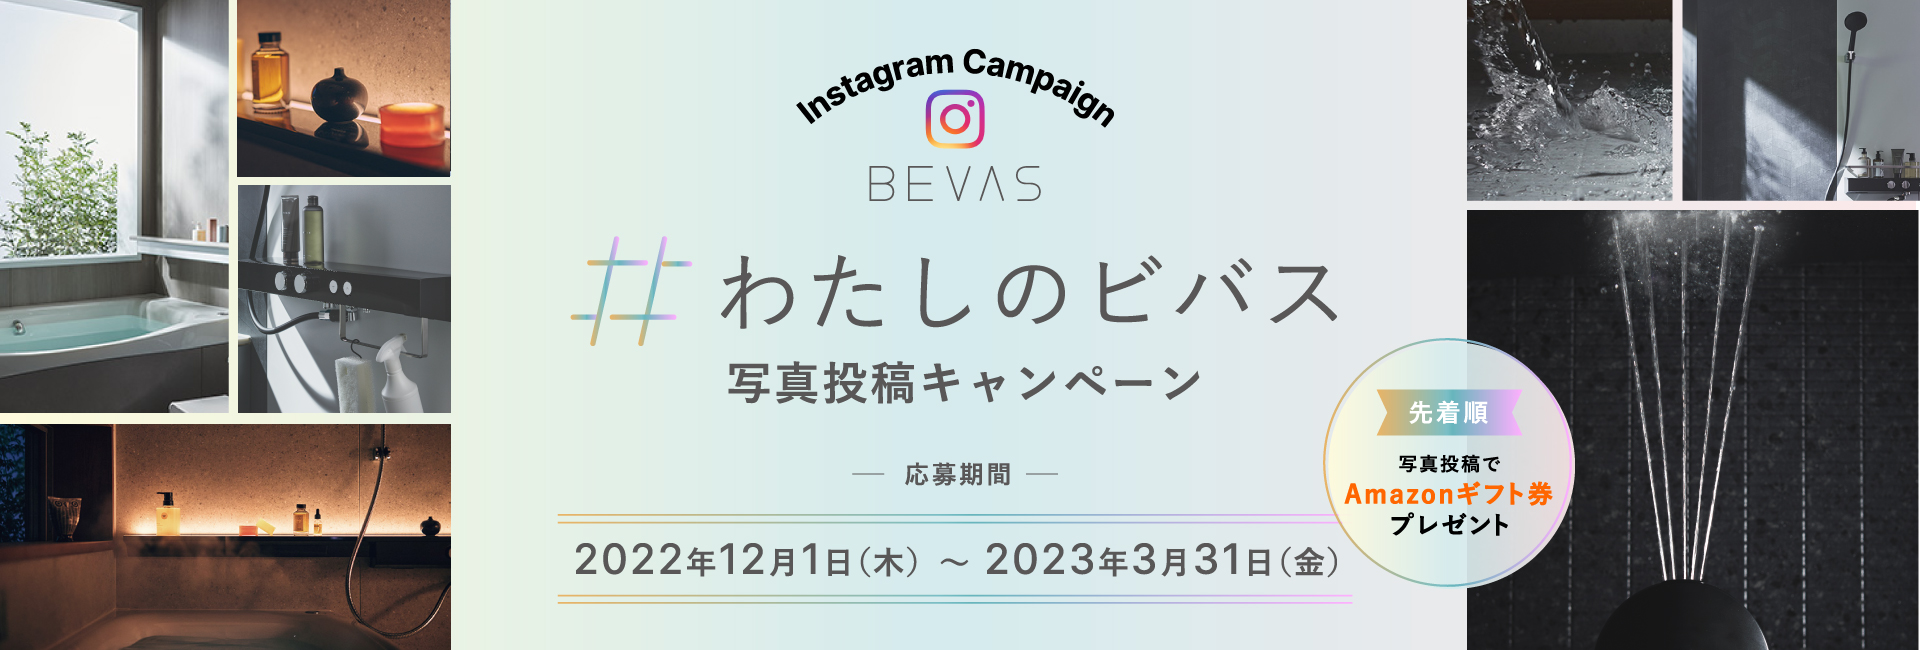 Instagram Campaign #わたしのビバス 写真投稿キャンペーン